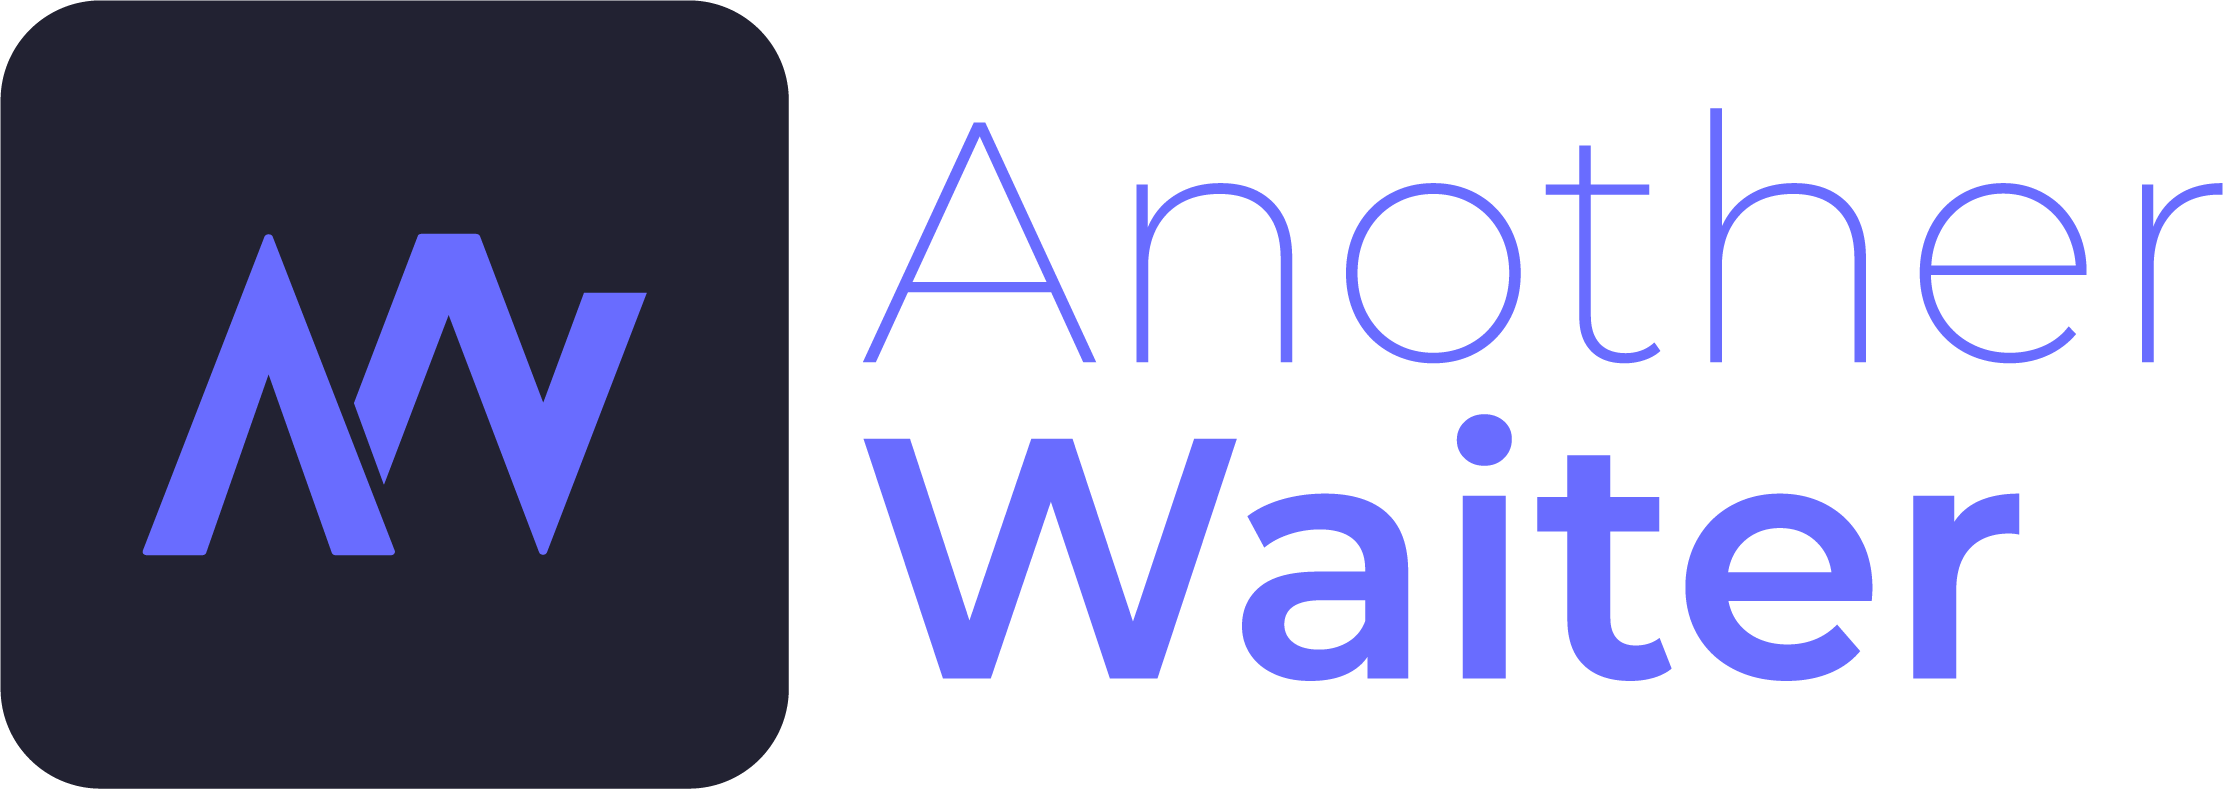 AnotherWaiter logo